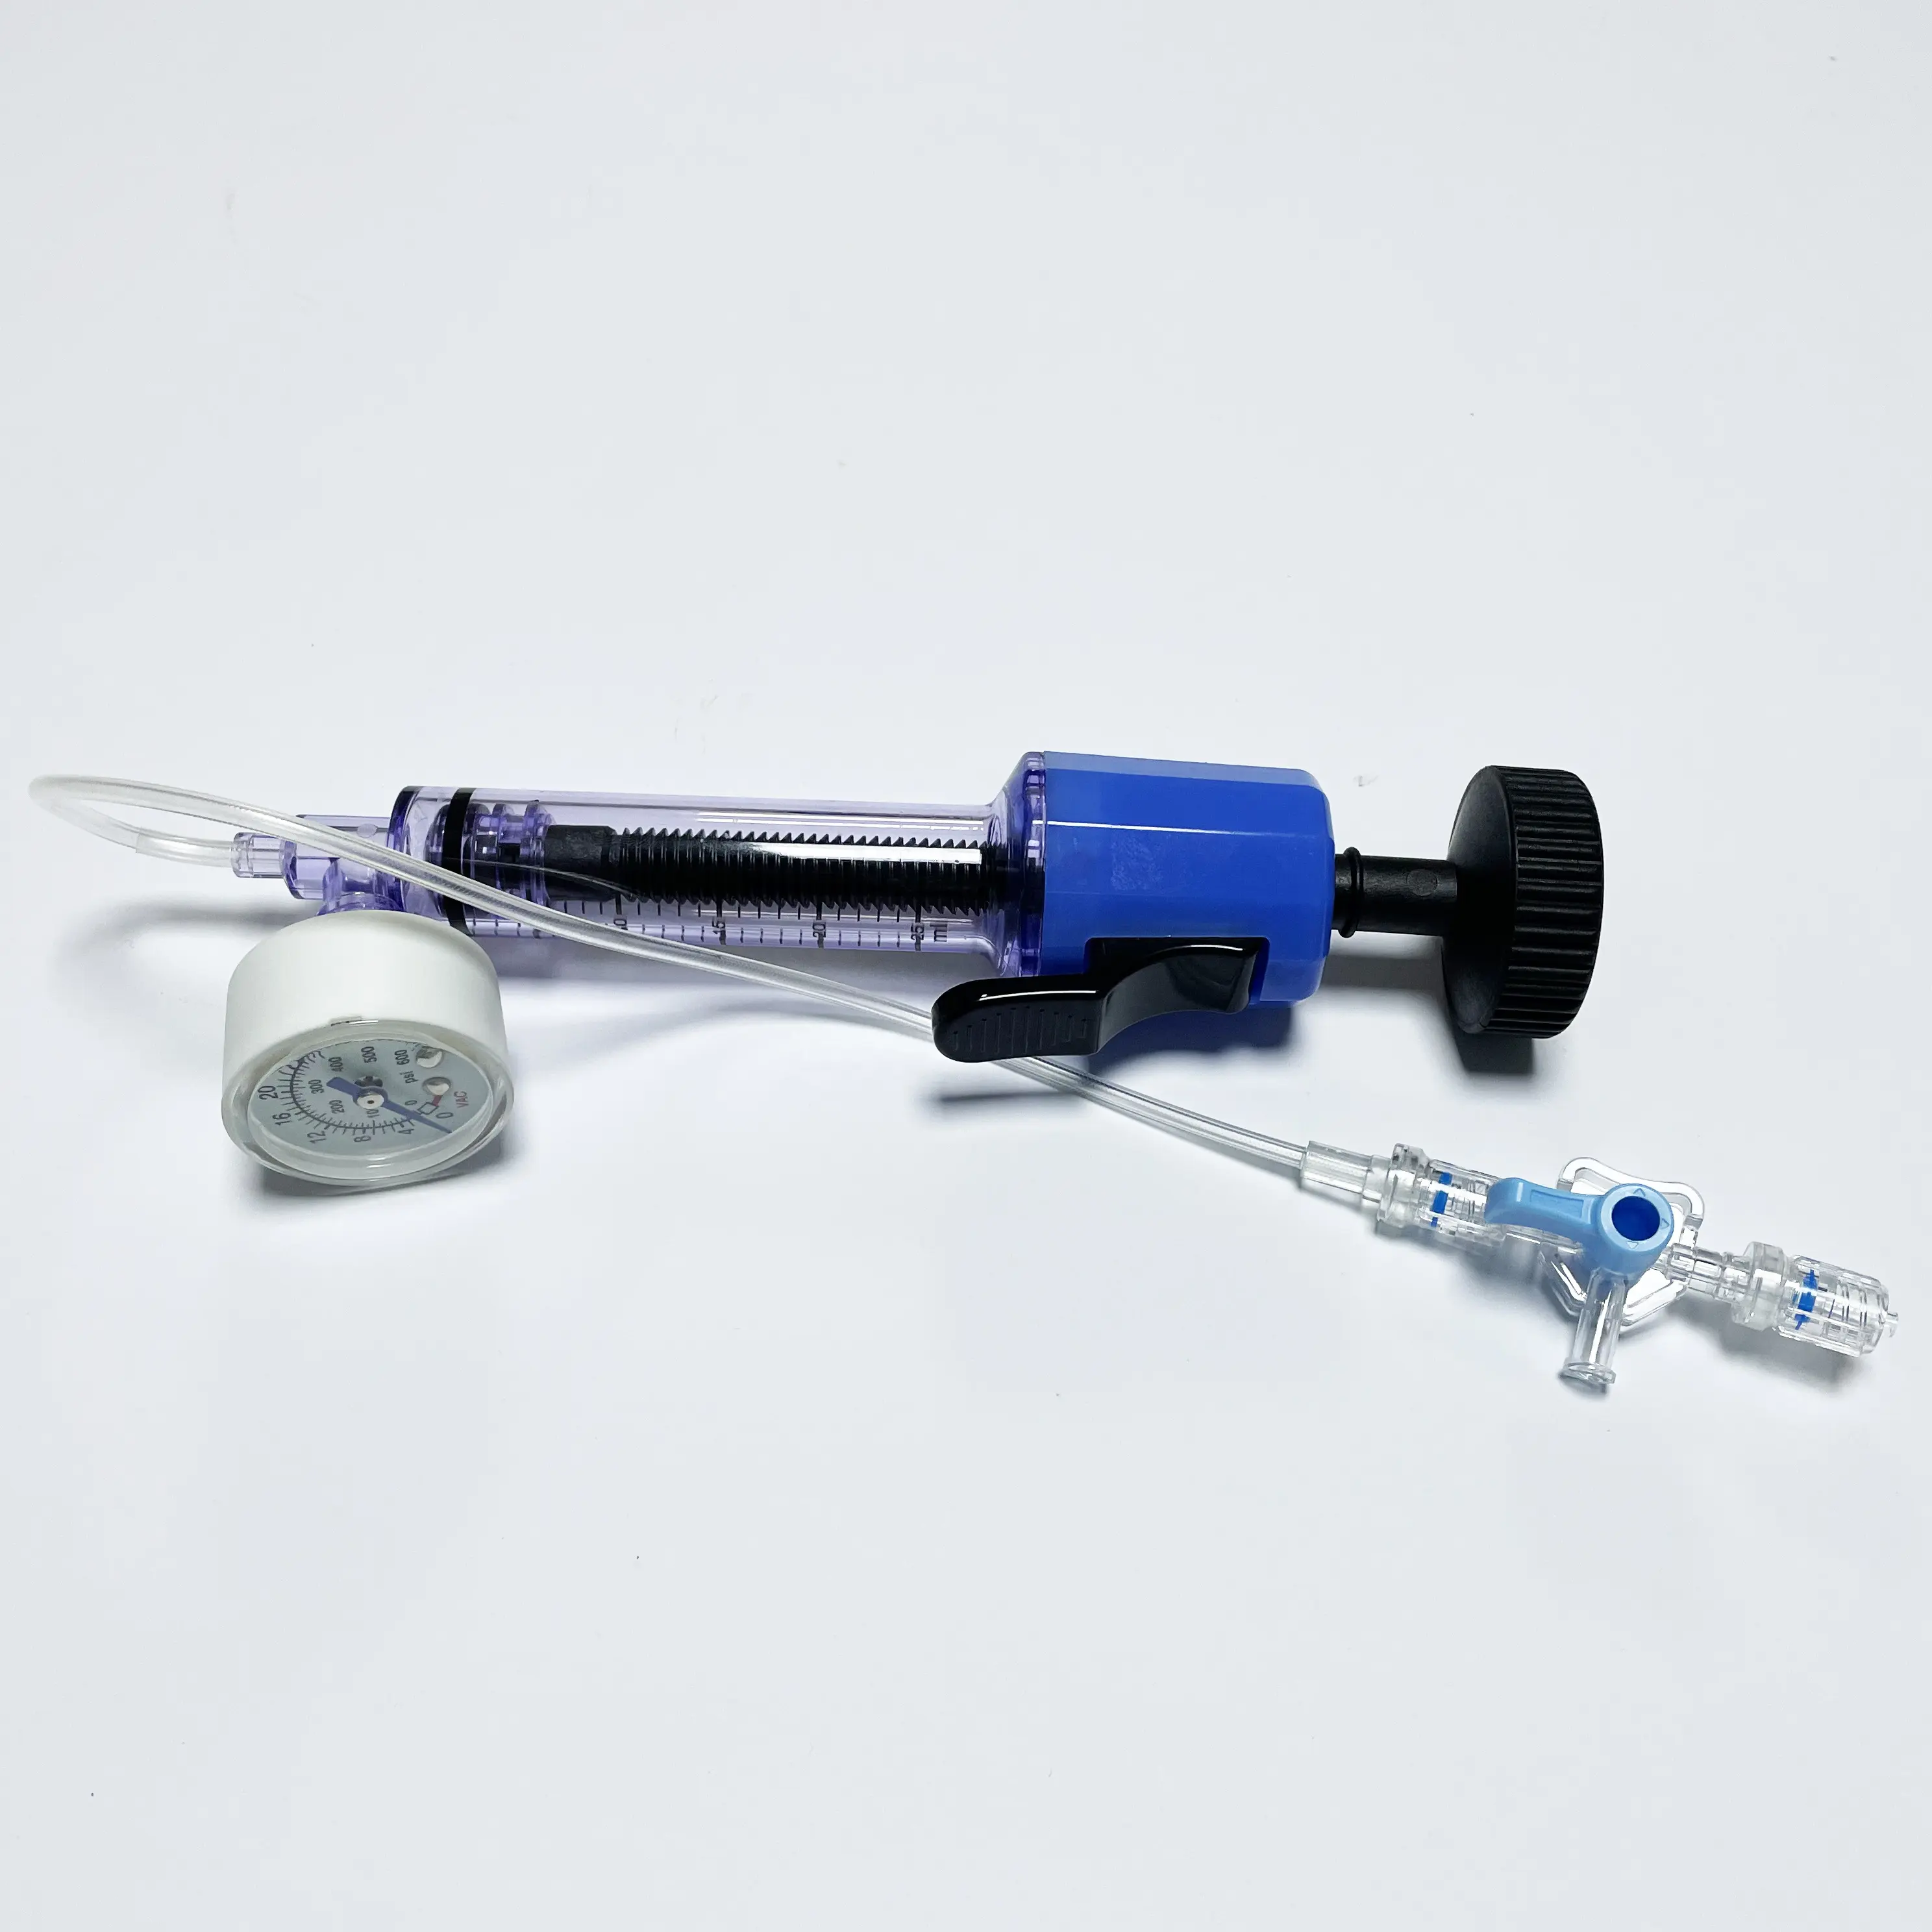 Tianck medical supplies PTCA pressure vascular pump angioplasty 40ATM balloon inflation device